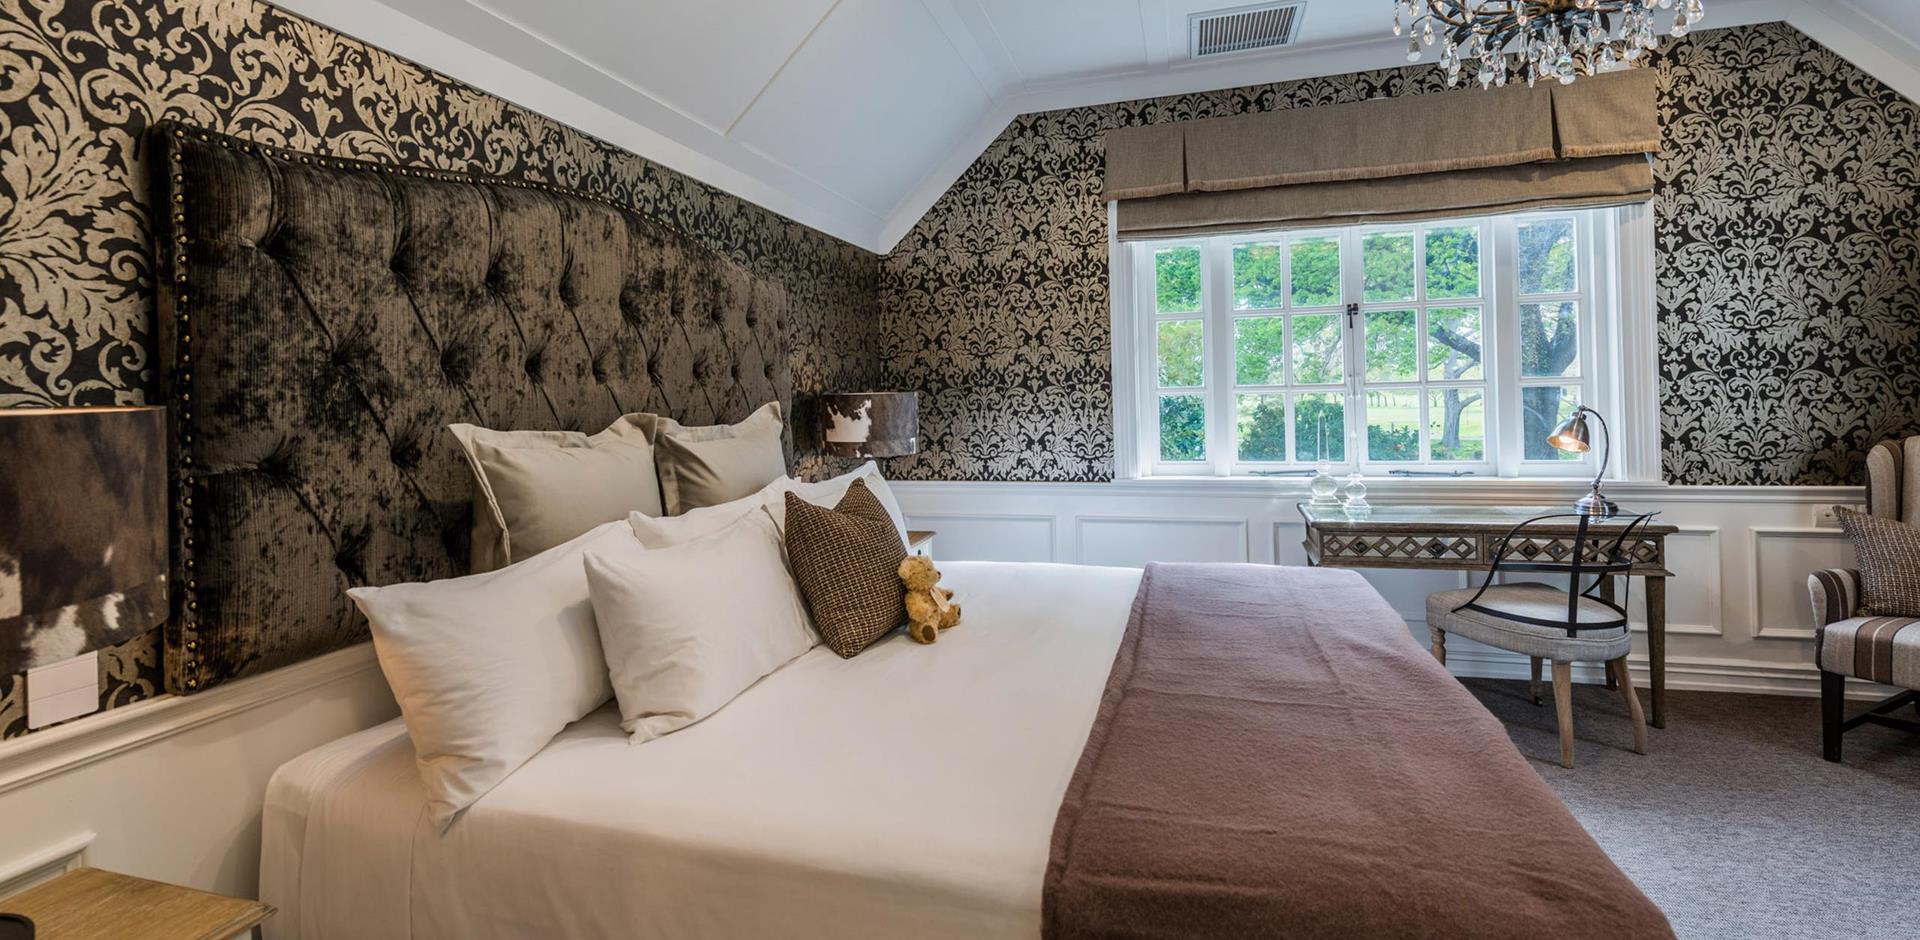 Bedroom, The George Hotel, New Zealand